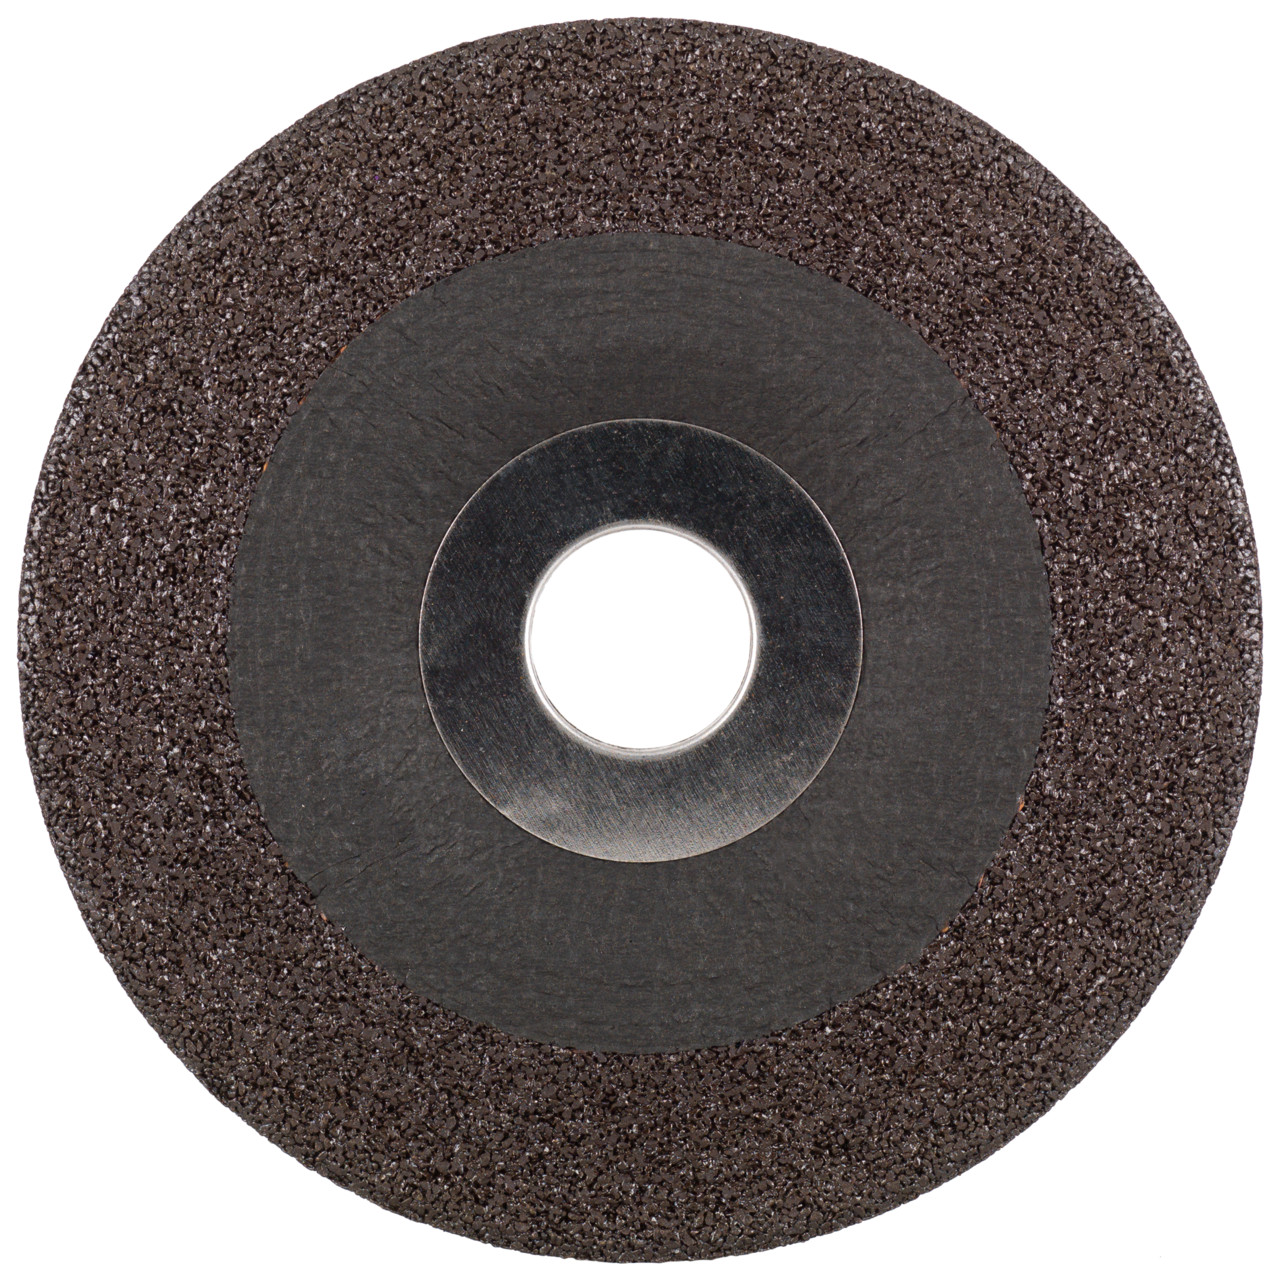 Tyrolit Rough grinding disc DxUxH 150x7x22.23 LONGLIFE Z-MAX for steel, shape: 27 - offset version, Art. 34353686